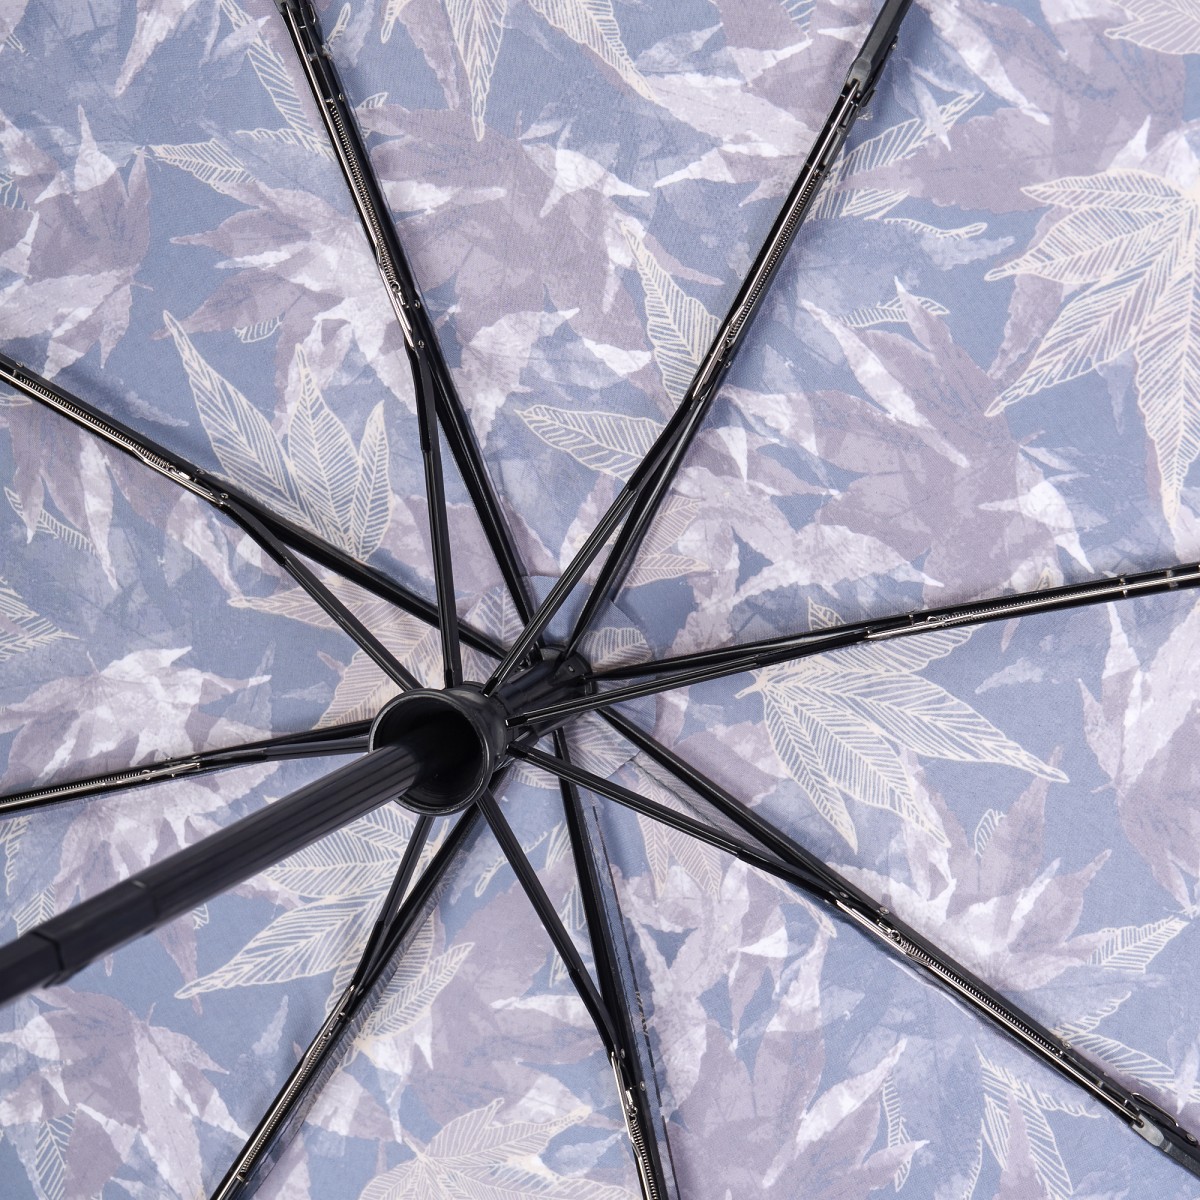 Зонт складной женский Fulton R348-3283 CamoLeaves